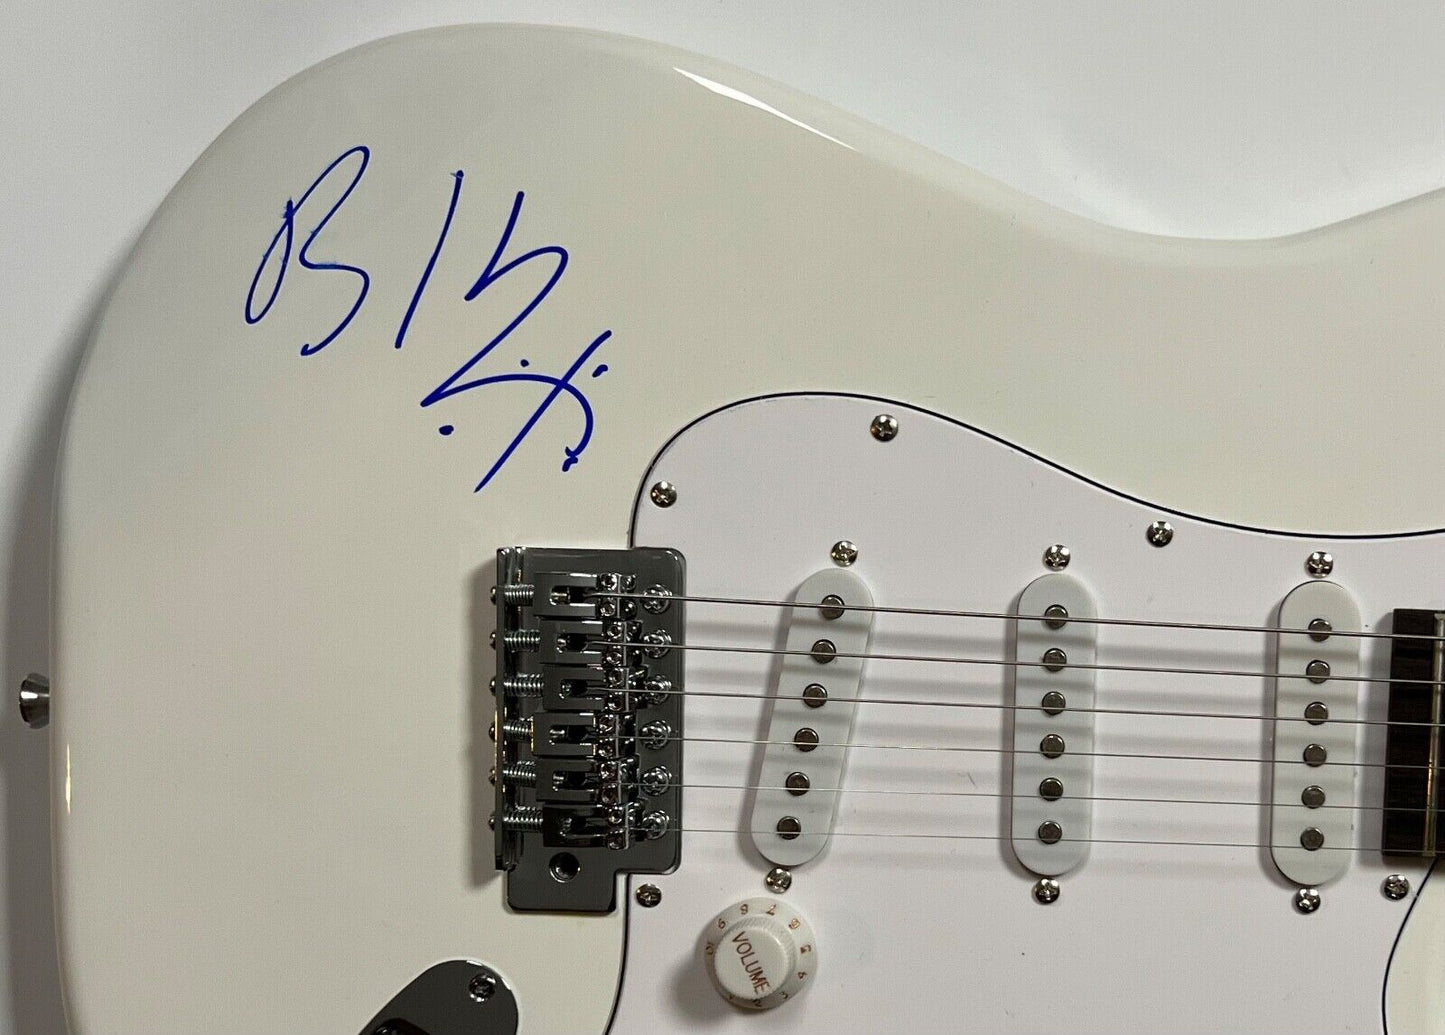 Billy Idol JSA Autograph Signed Stratocaster Guitar